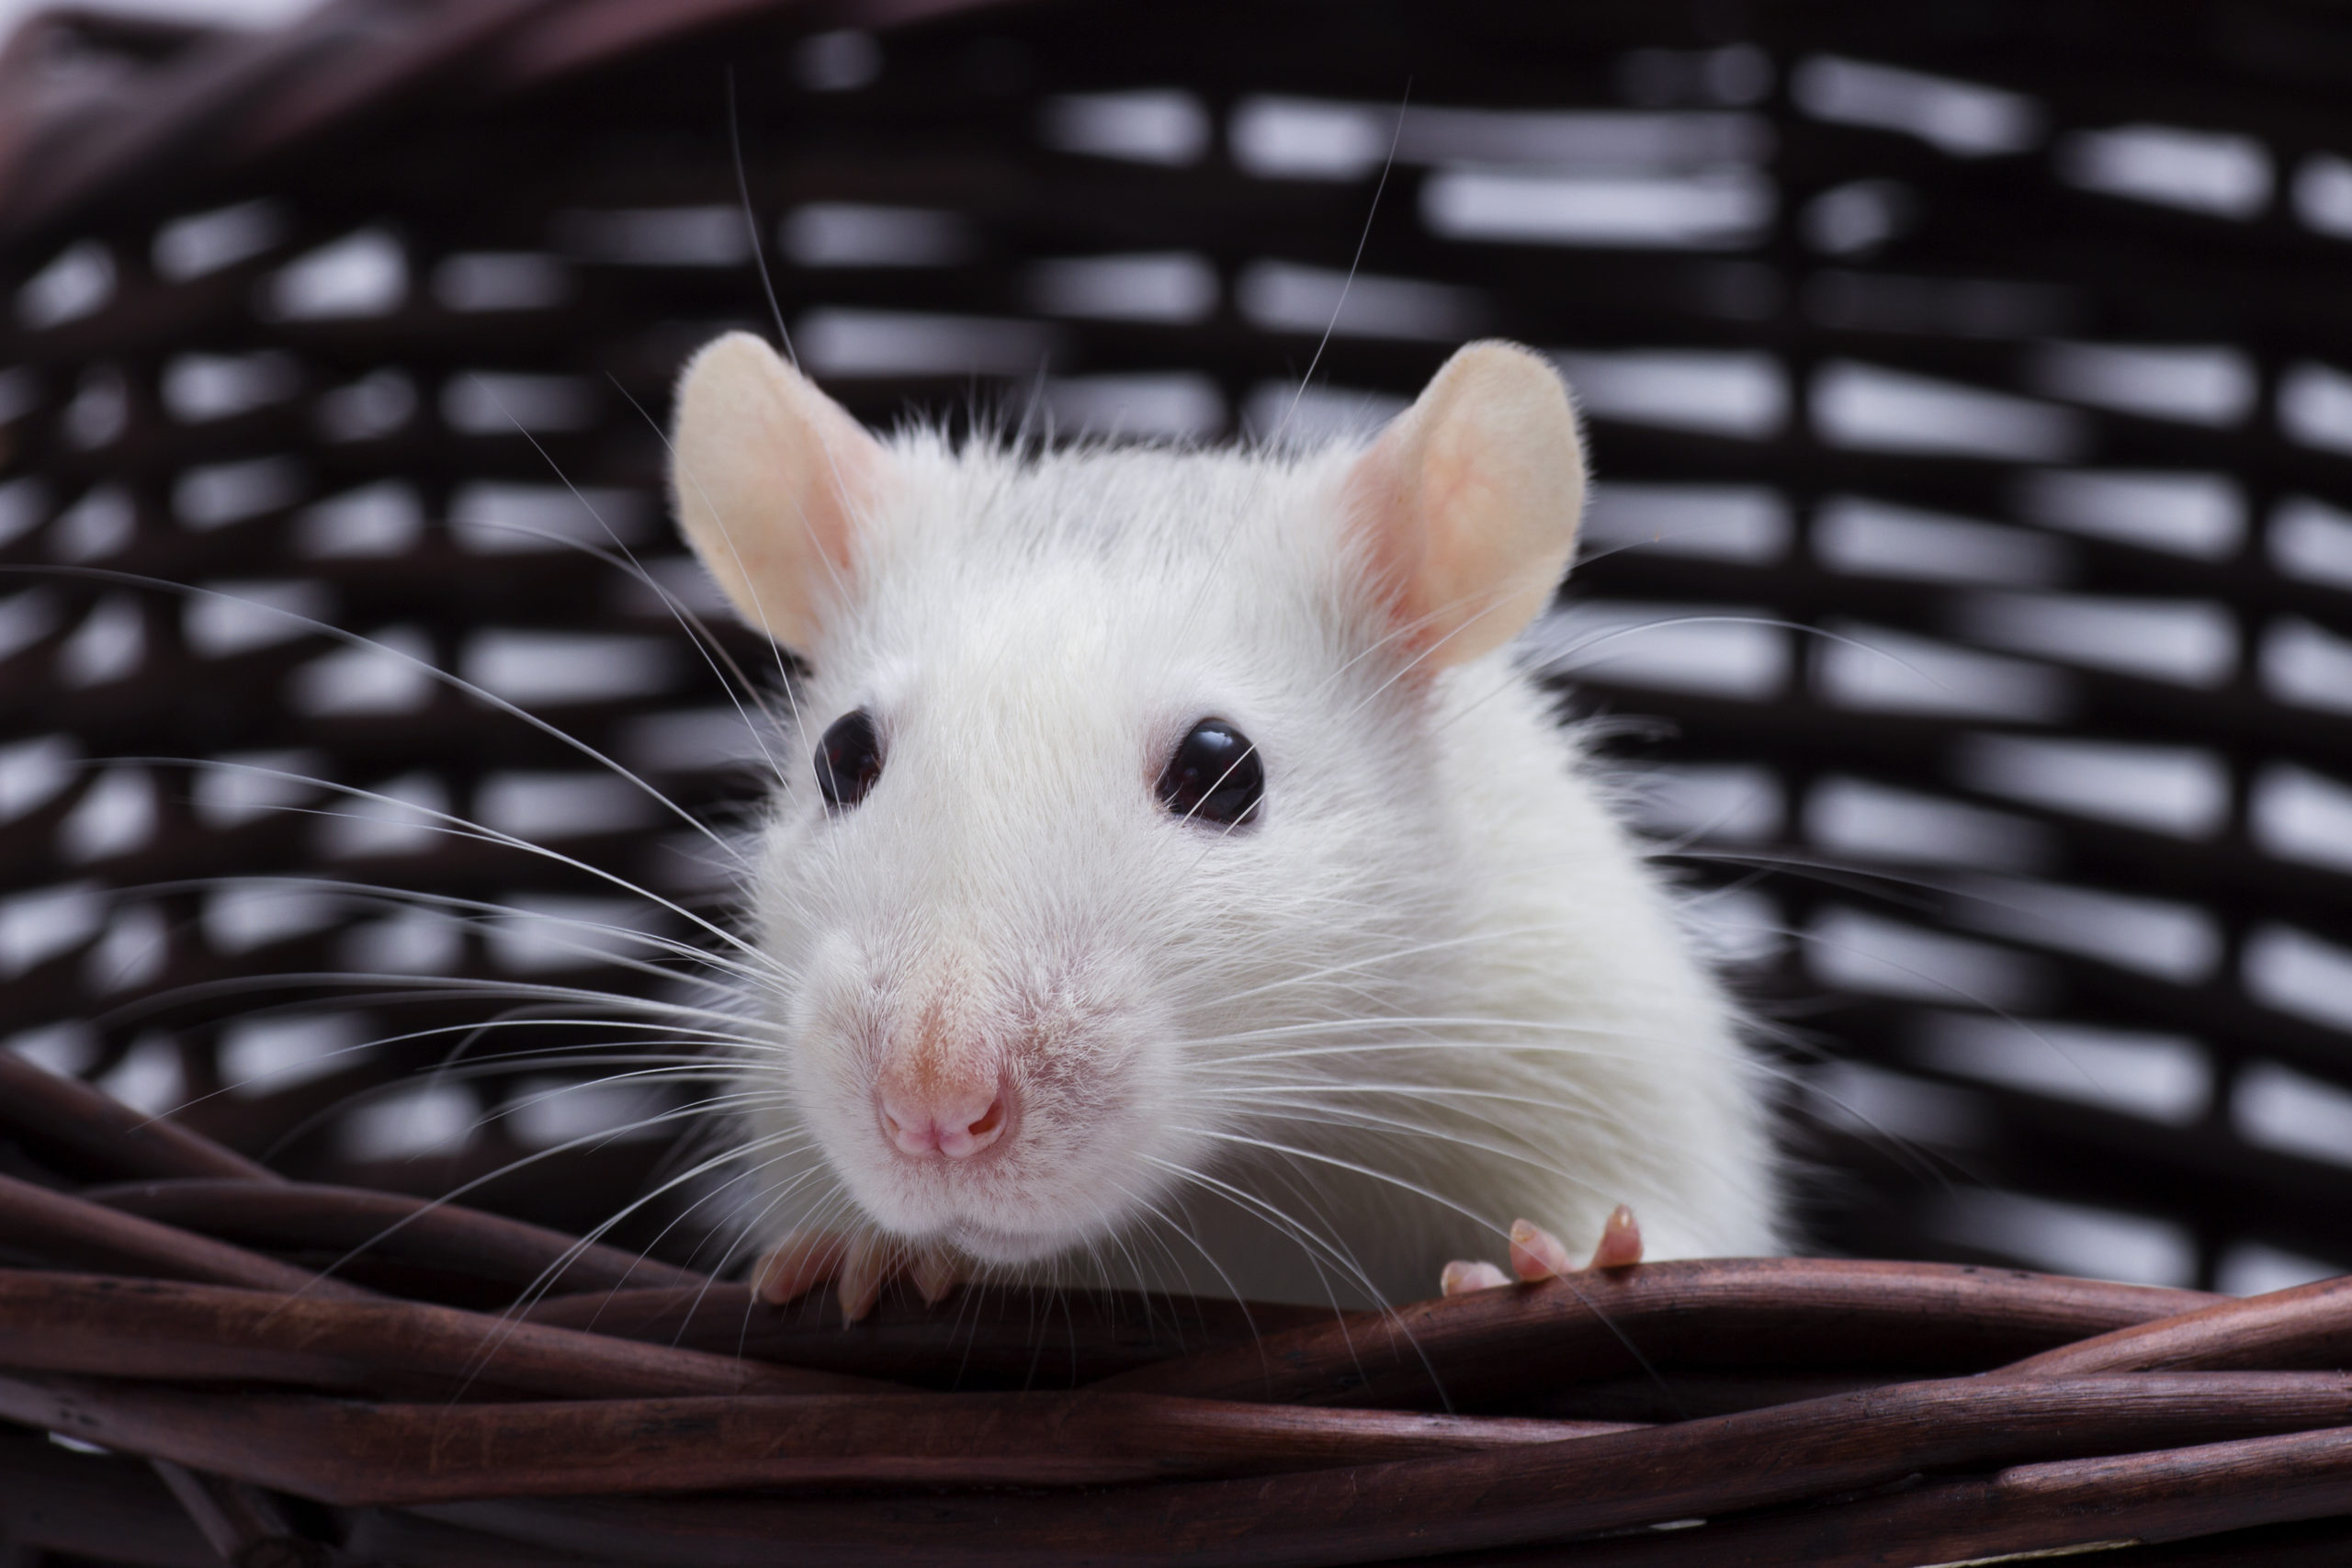 Rat in a basket